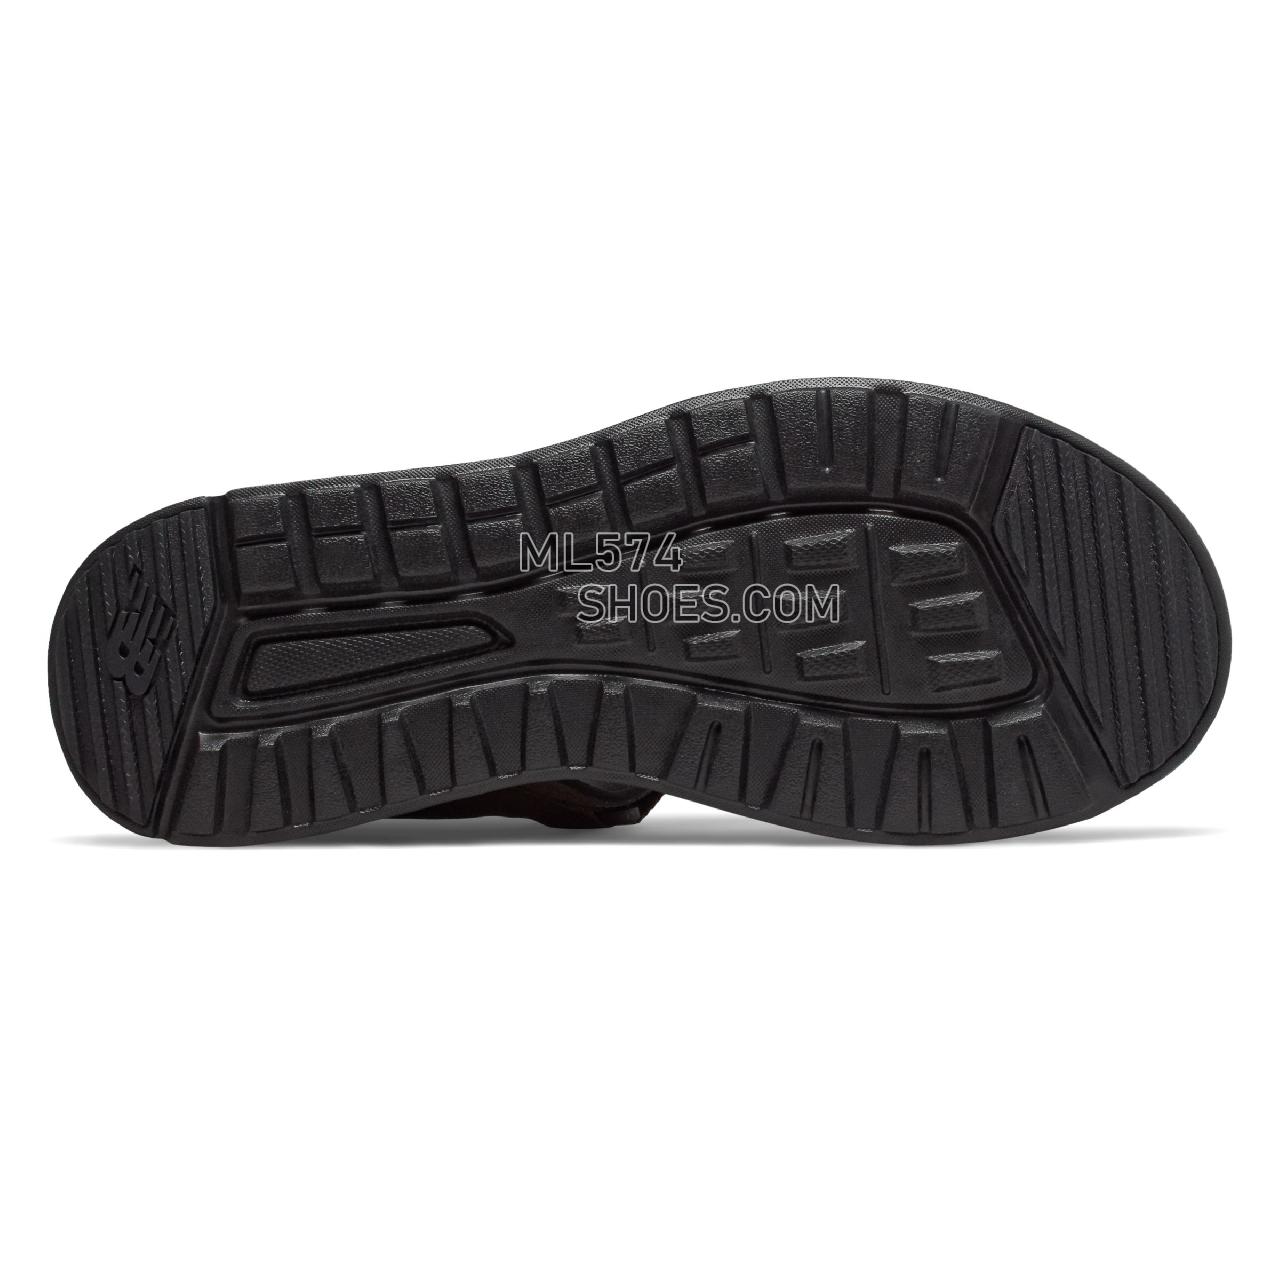 New Balance 250 - Men's Sandals - Brown Adrift with Black - SUA250B1